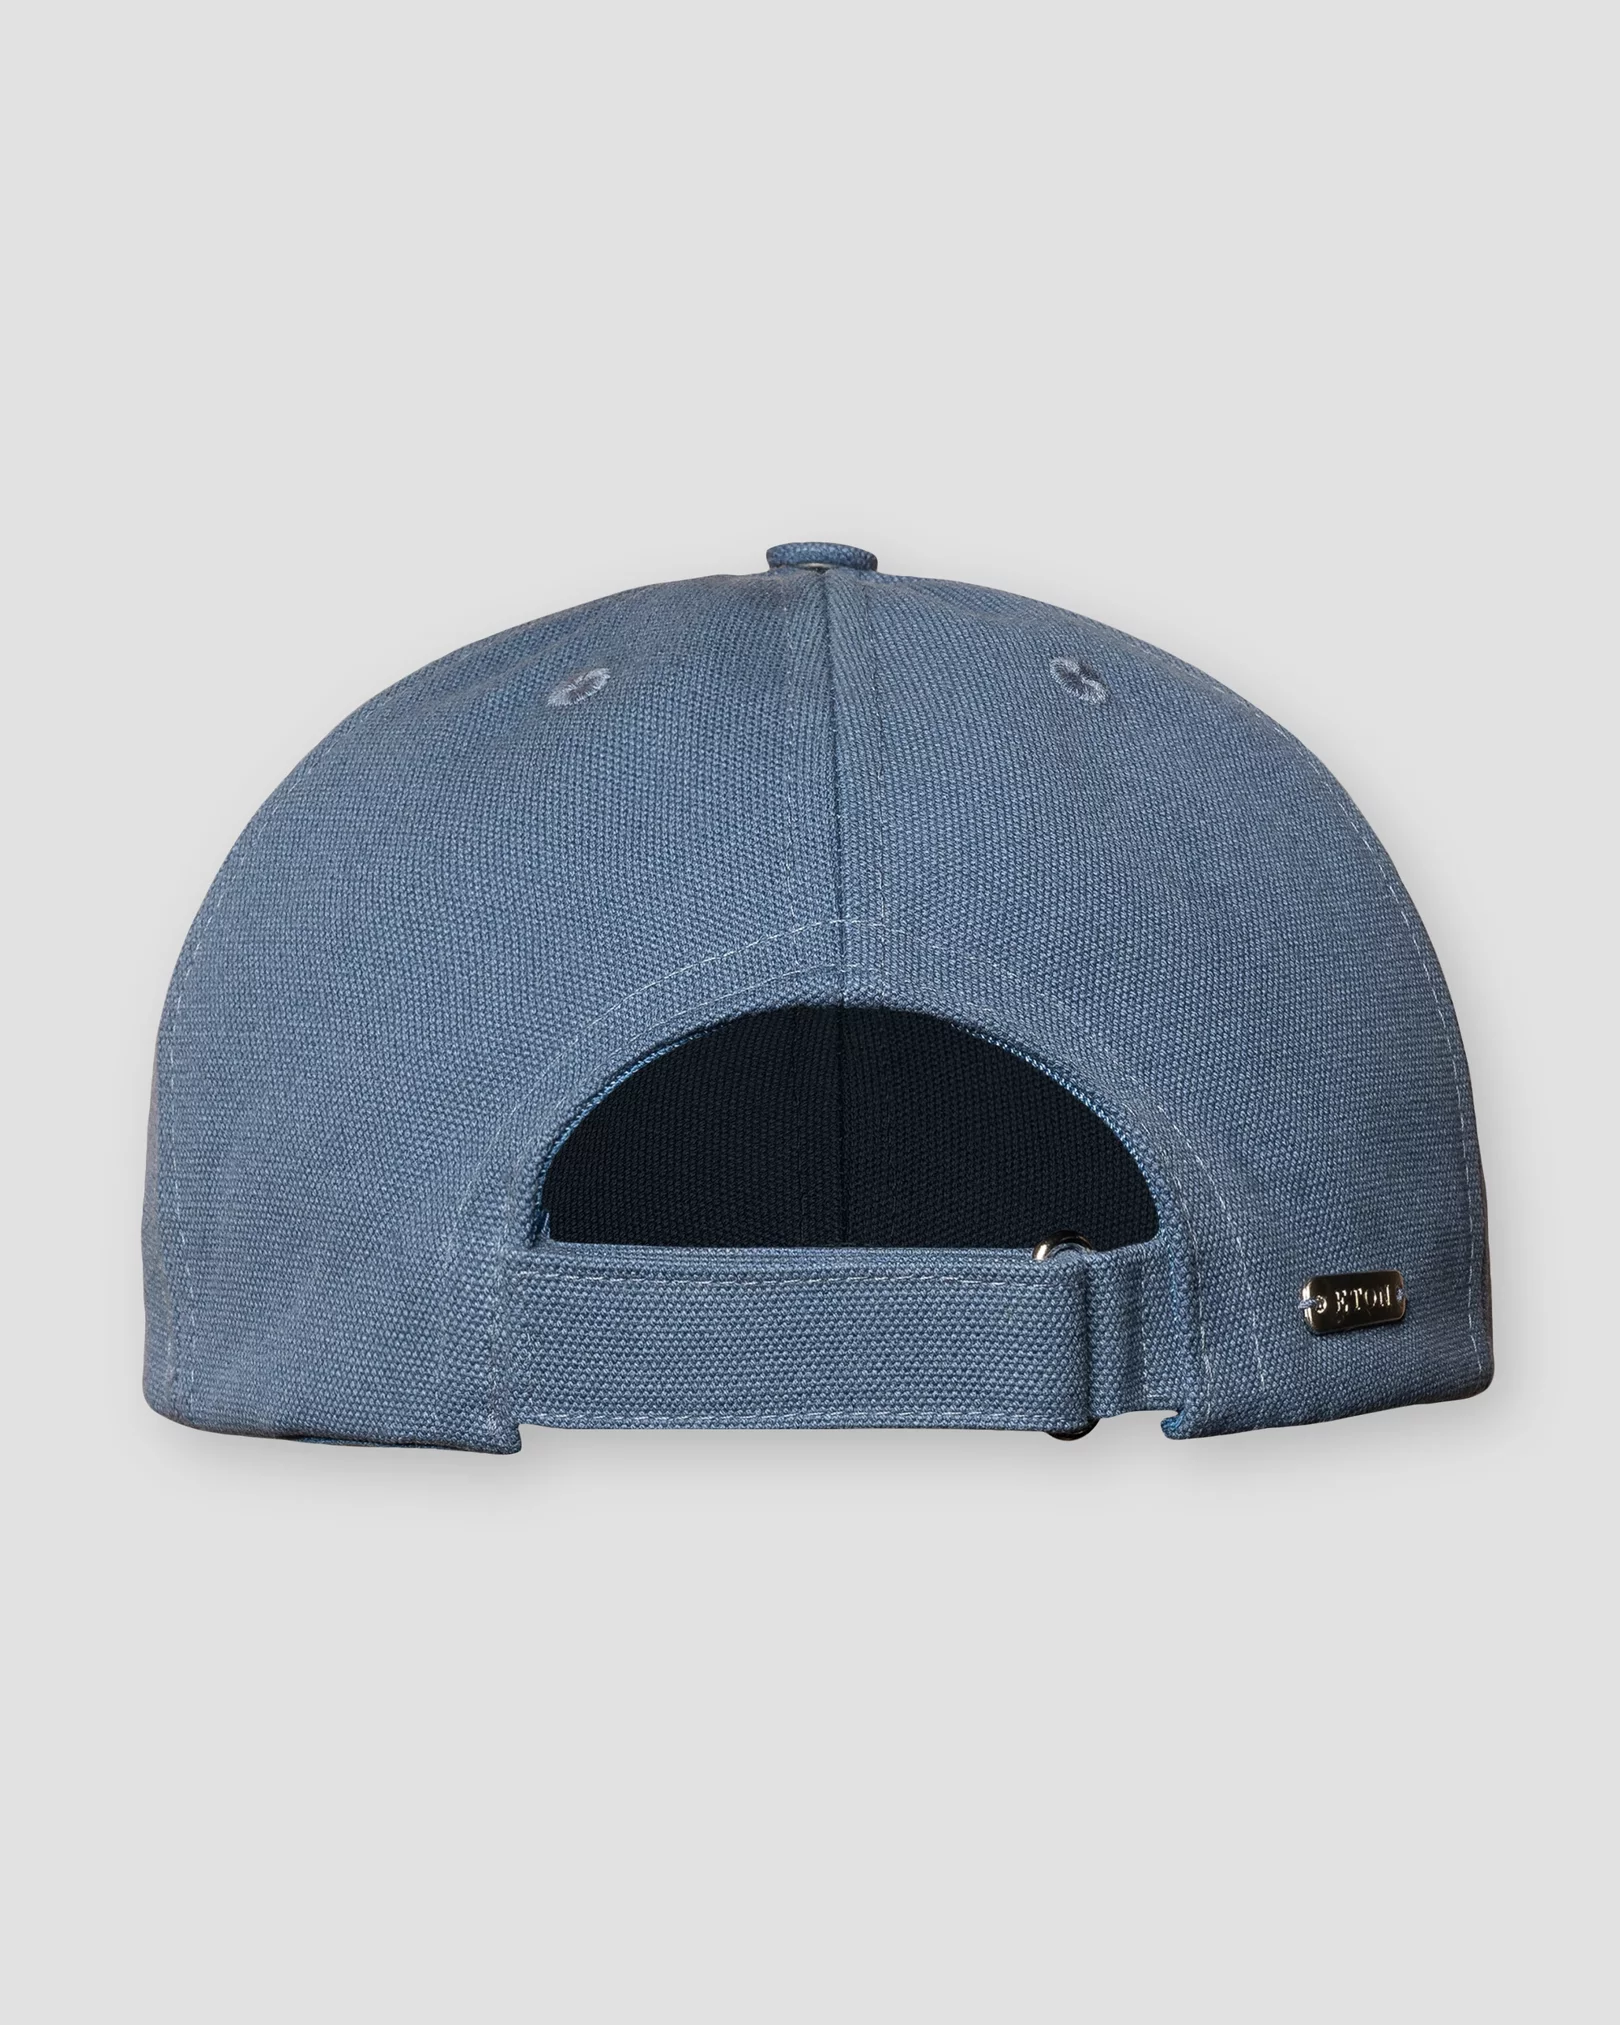 Eton - mid blue cotton cap